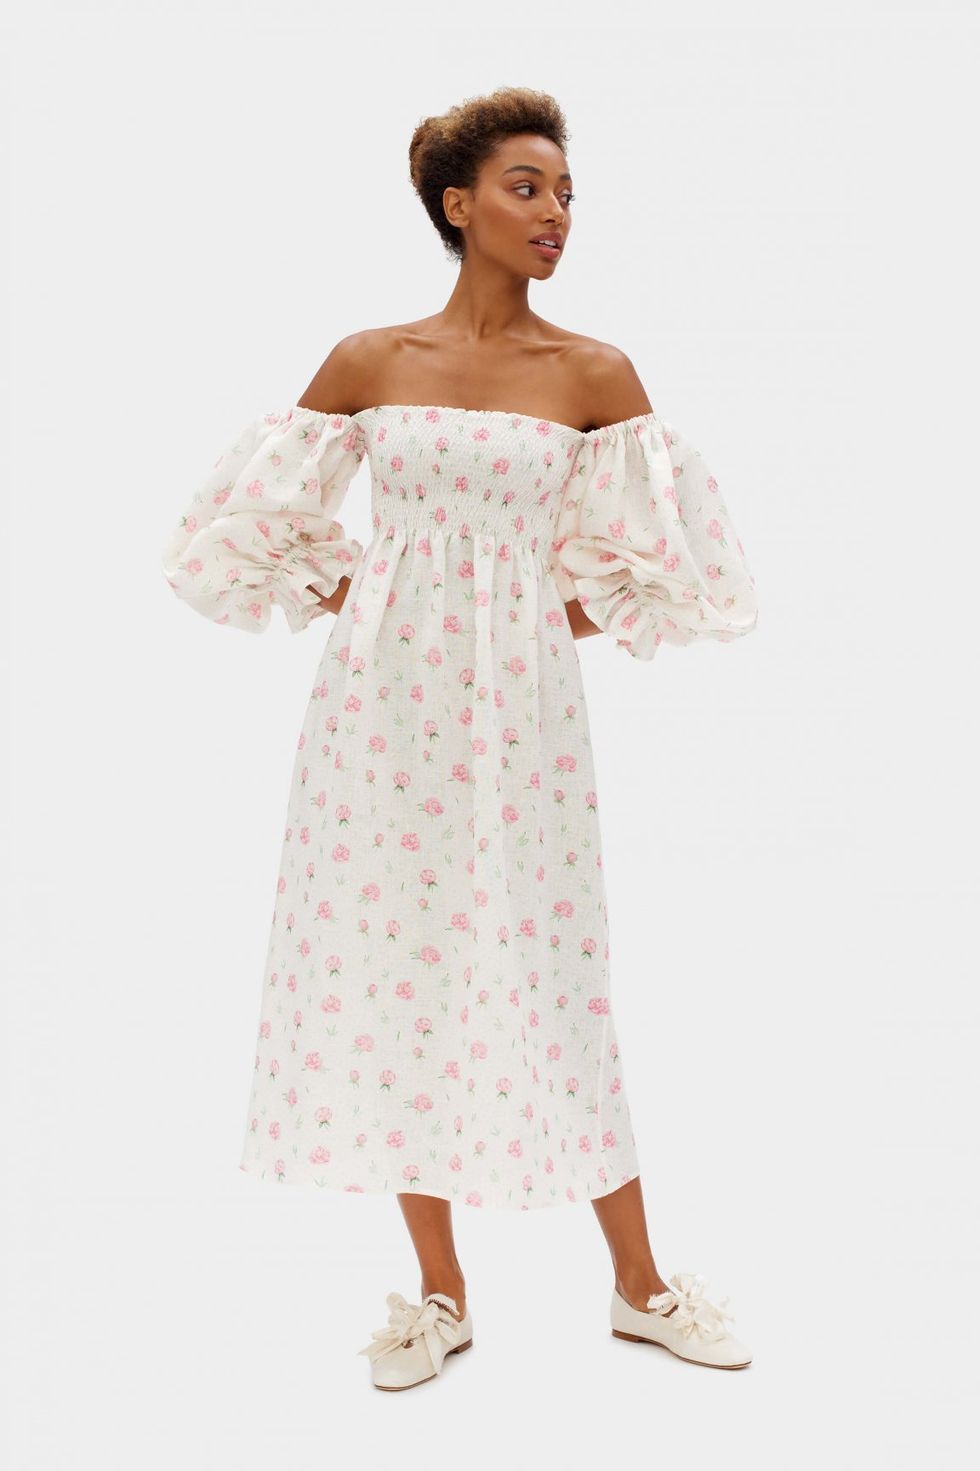 Atlanta Linen Dress in Roses: Floral dresses